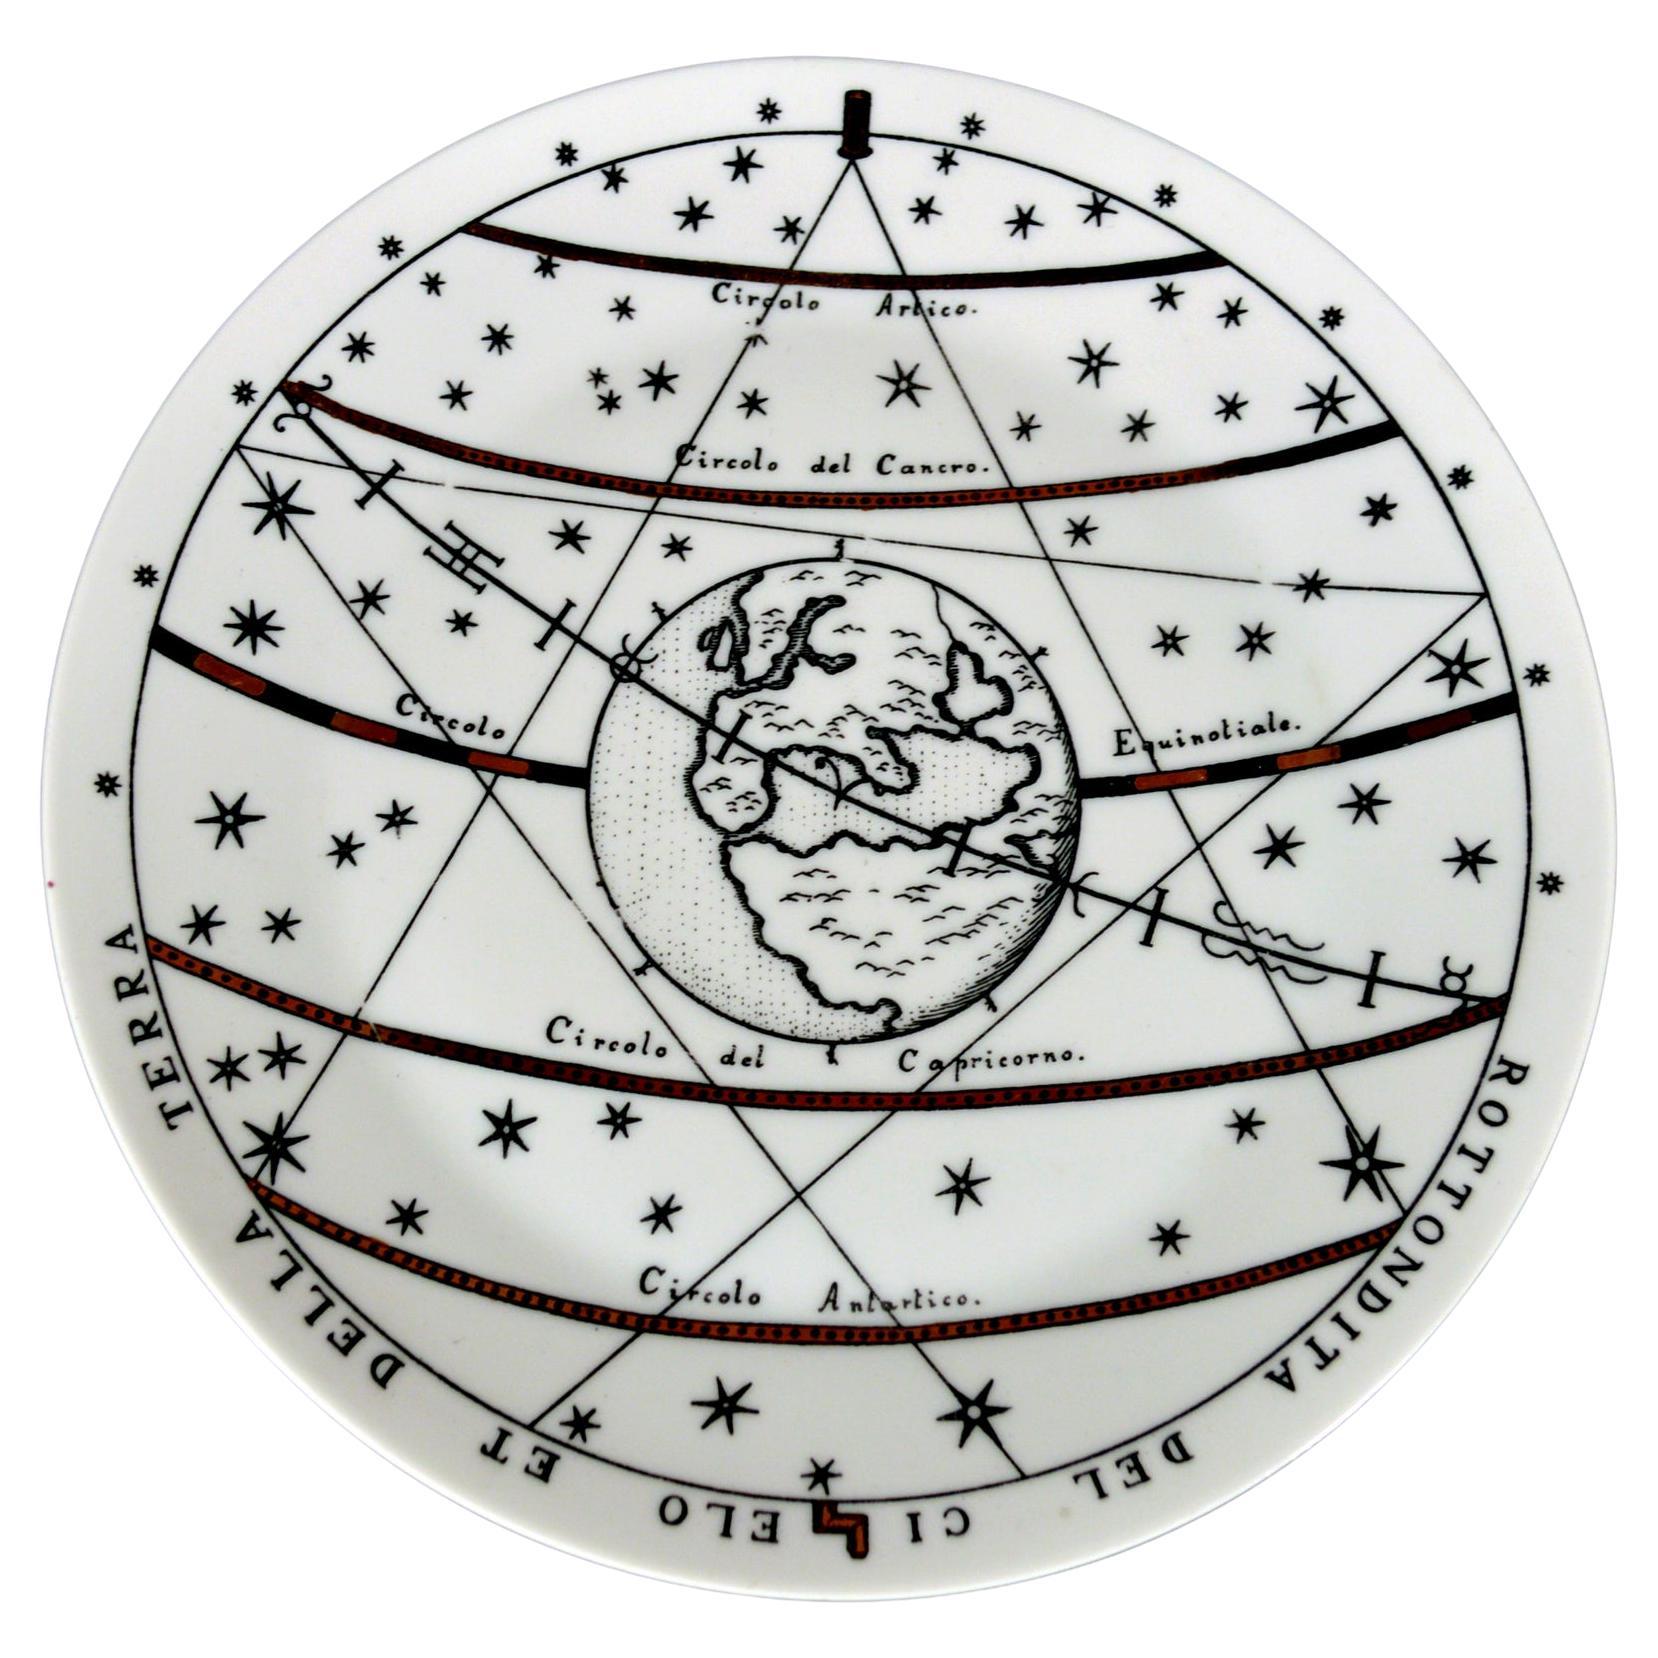 Piero Fornasetti Porcelain Astronomici Plate, #7 in Series